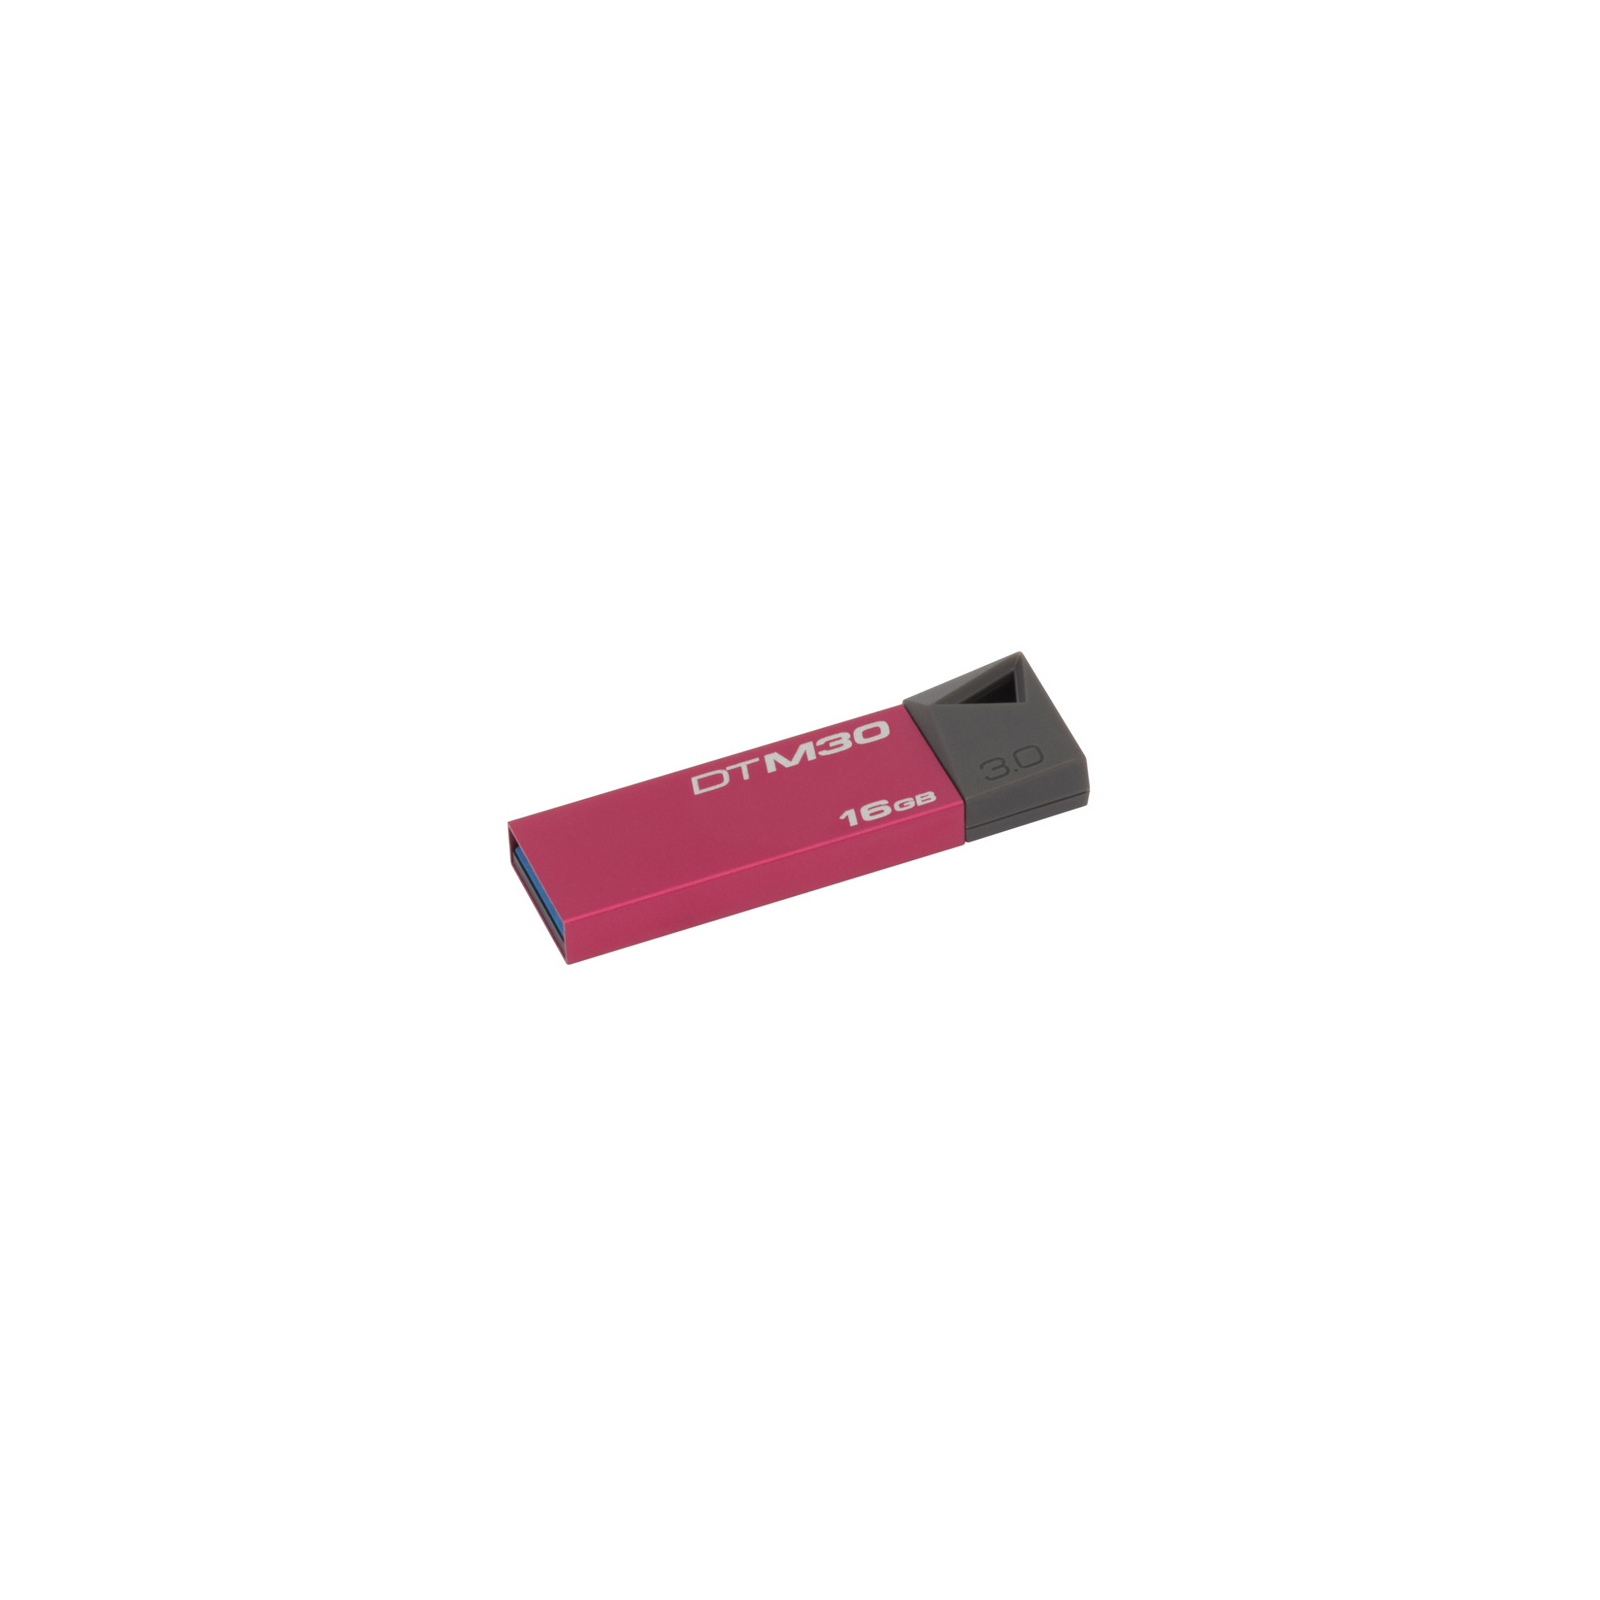 USB флеш накопитель Kingston 16Gb DataTraveler Mini 3.0 (DTM30/16GB) изображение 2